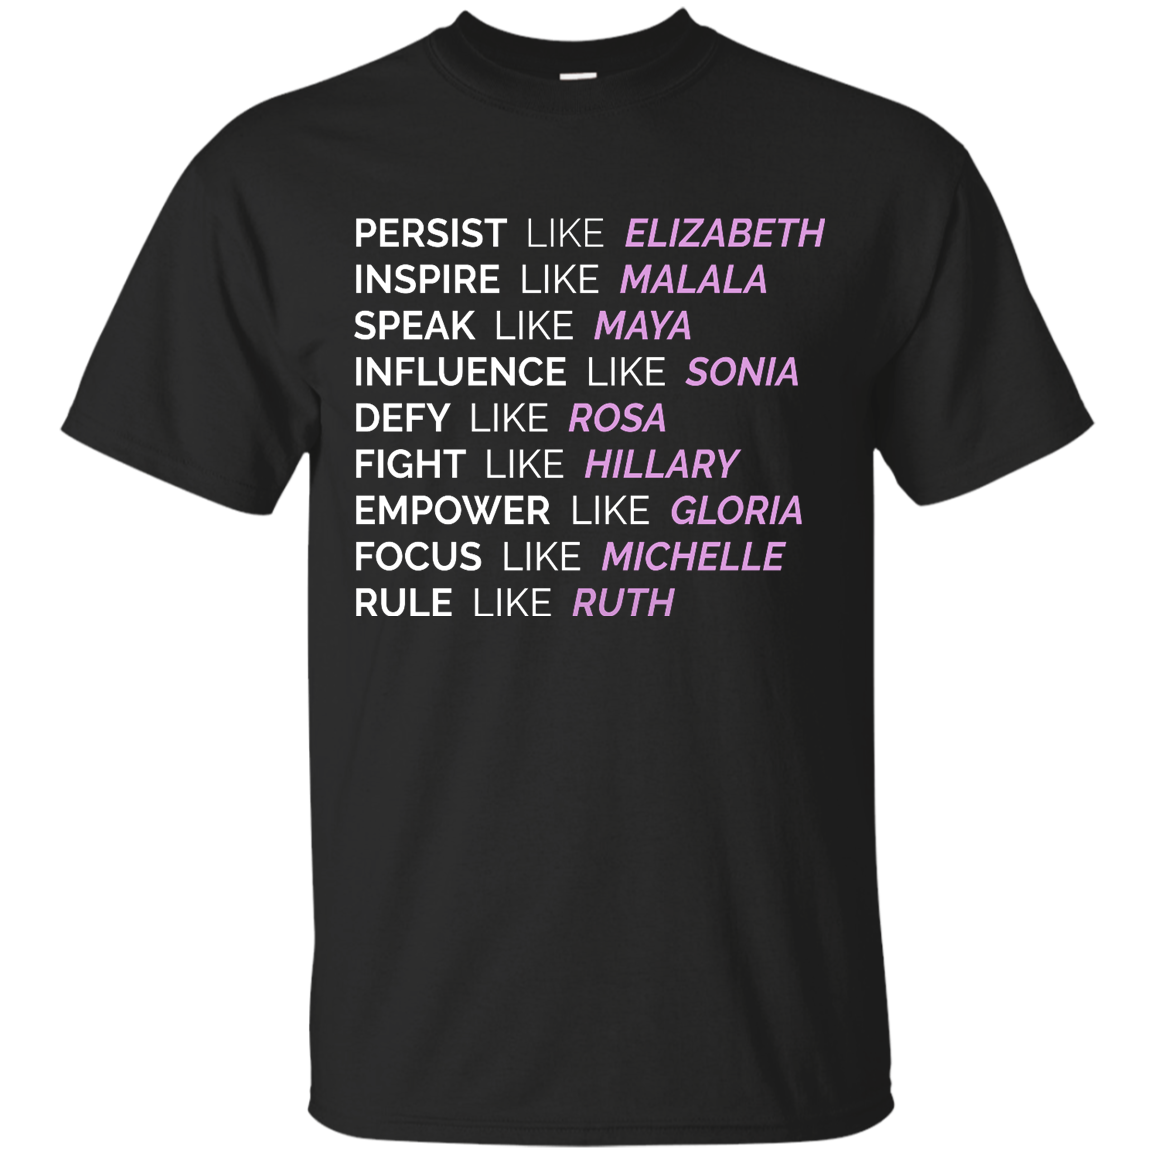 Persist like Elizabeth Inspire like Malala shirt, tank